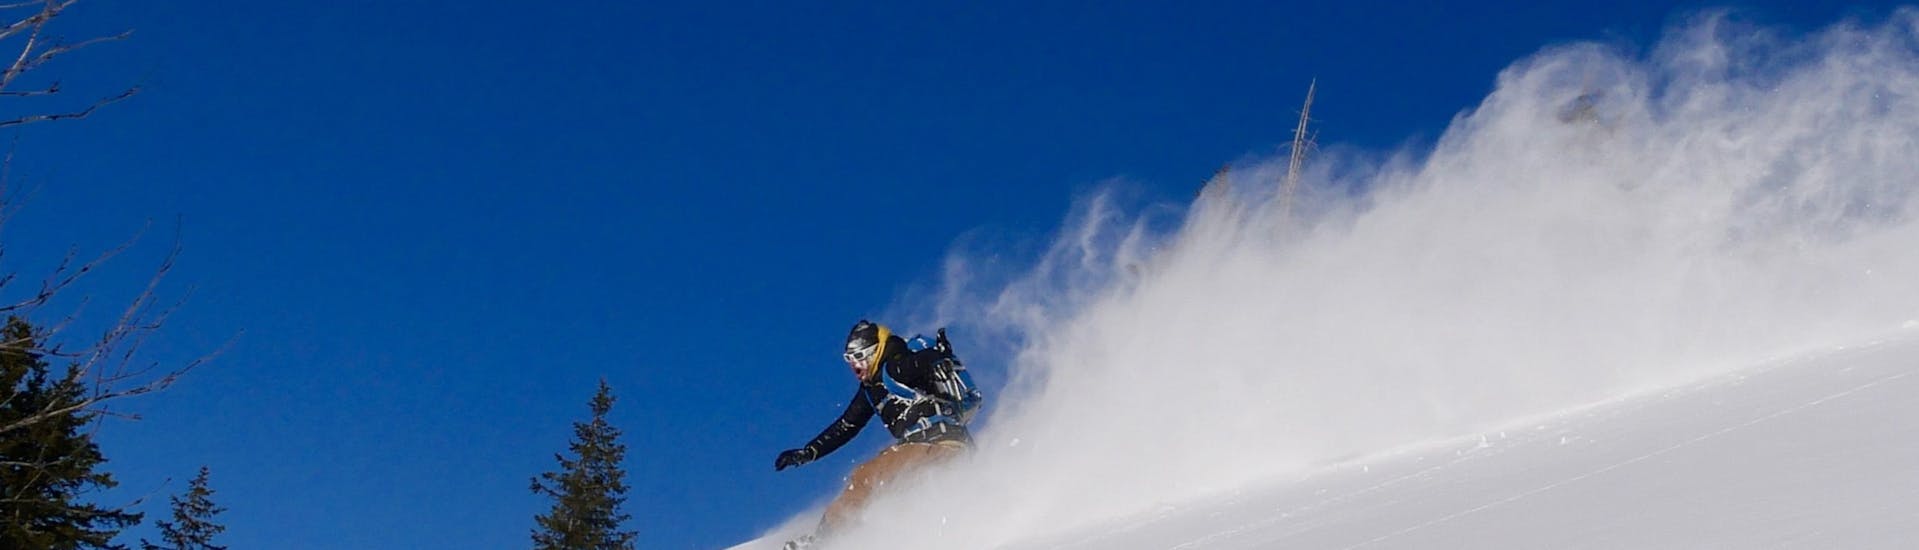 Lezioni private di Snowboard a partire da 6 anni per tutti i livelli.